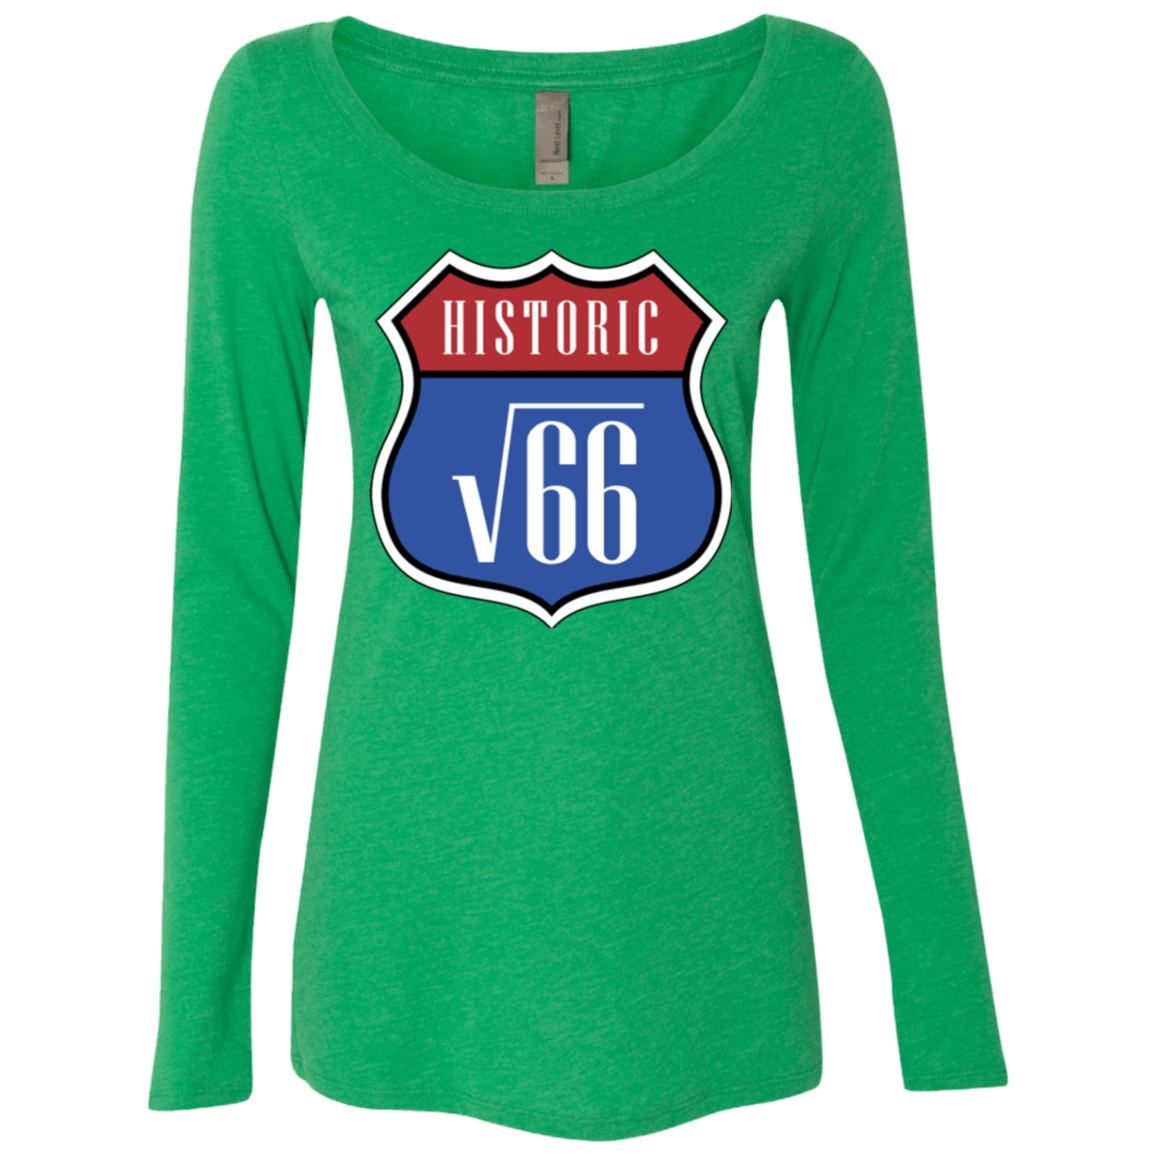 T-Shirts Envy / Small Route v66 Women's Triblend Long Sleeve Shirt